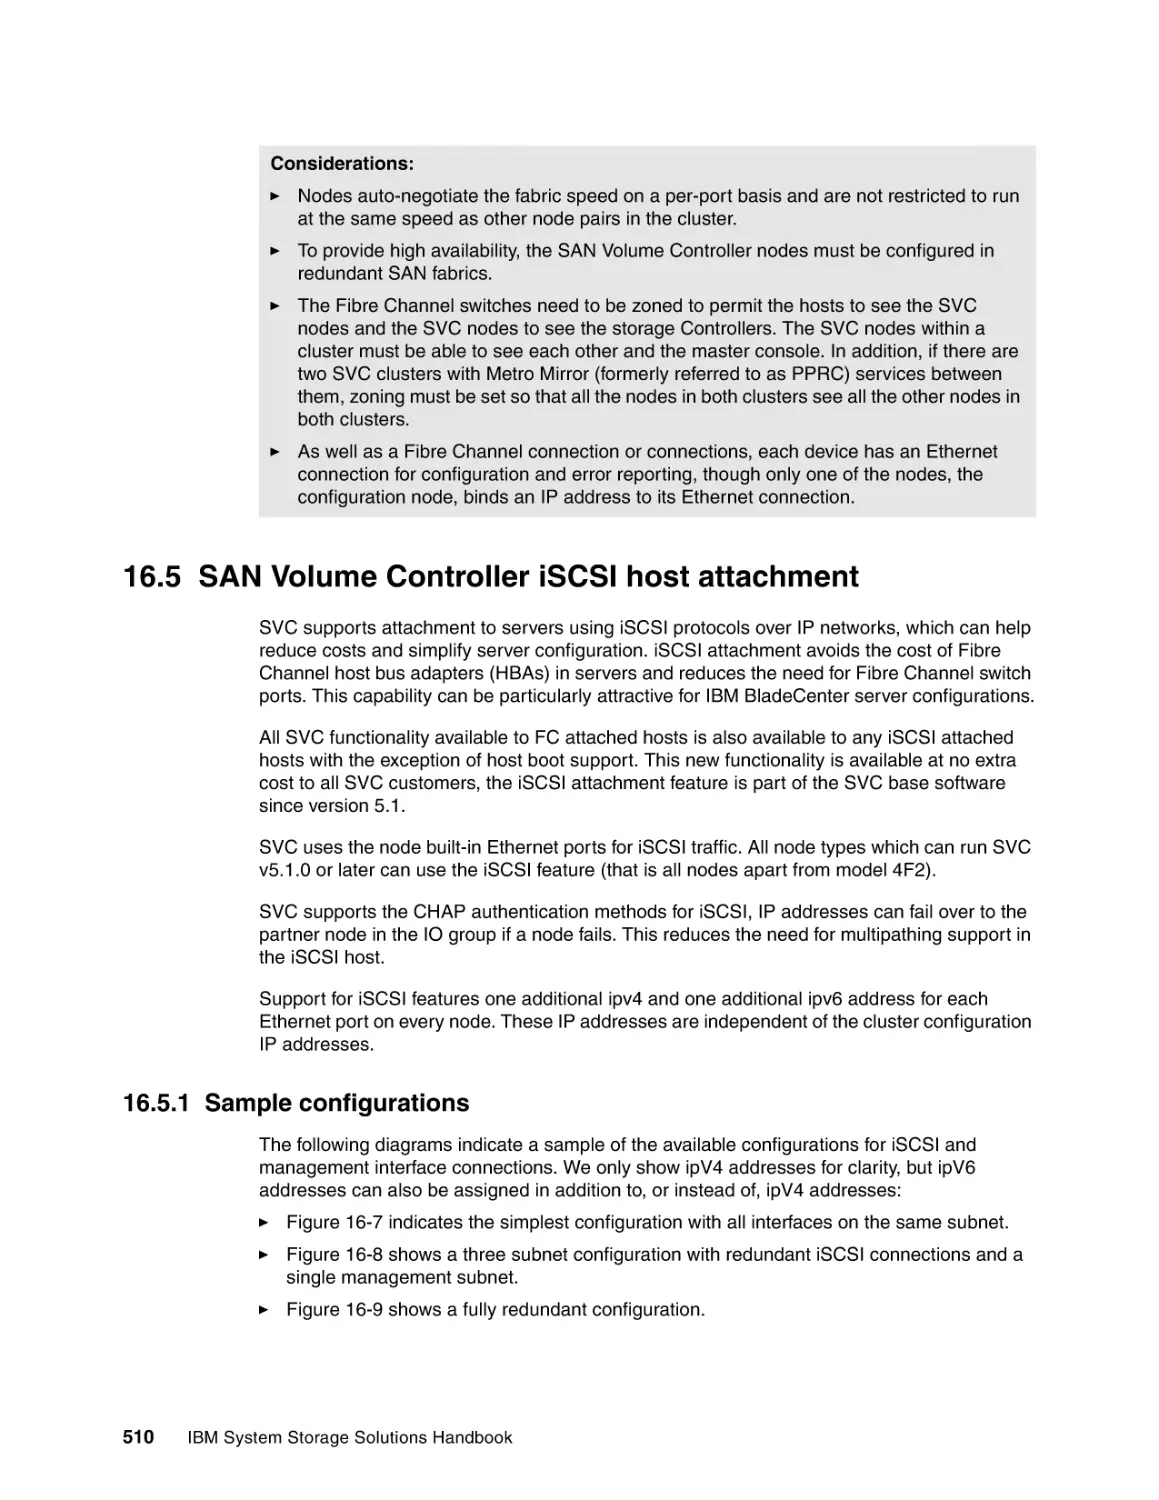 16.5 SAN Volume Controller iSCSI host attachment
16.5.1 Sample configurations